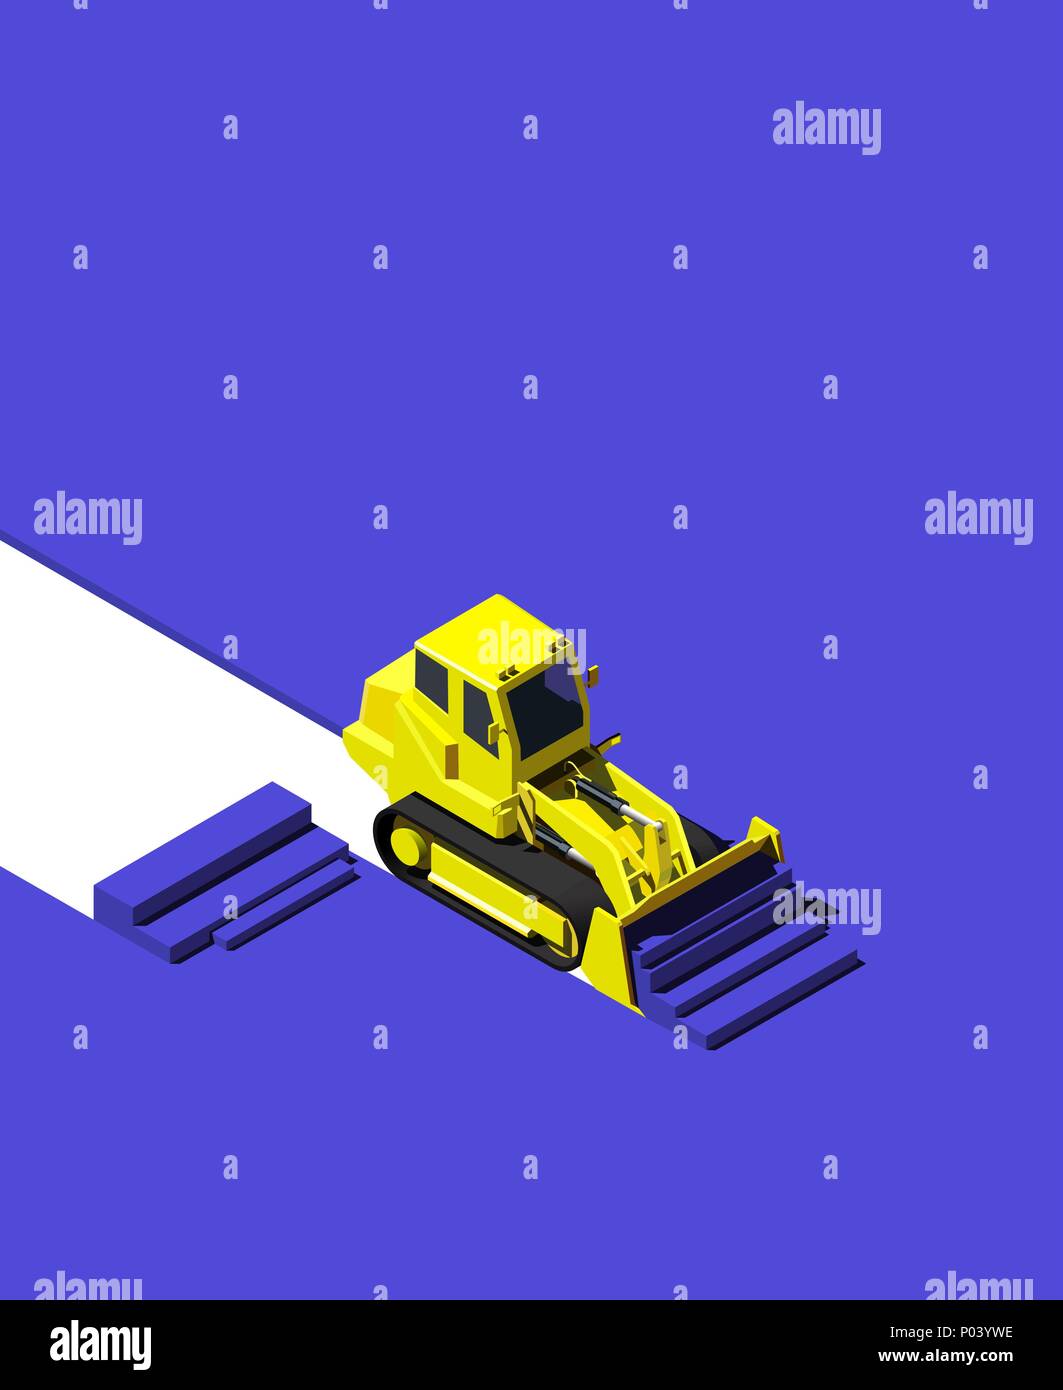 Yellow bulldozer pushing blue ground. Modern isometric construction vehicle illustration. Low poly style. Stock Vector